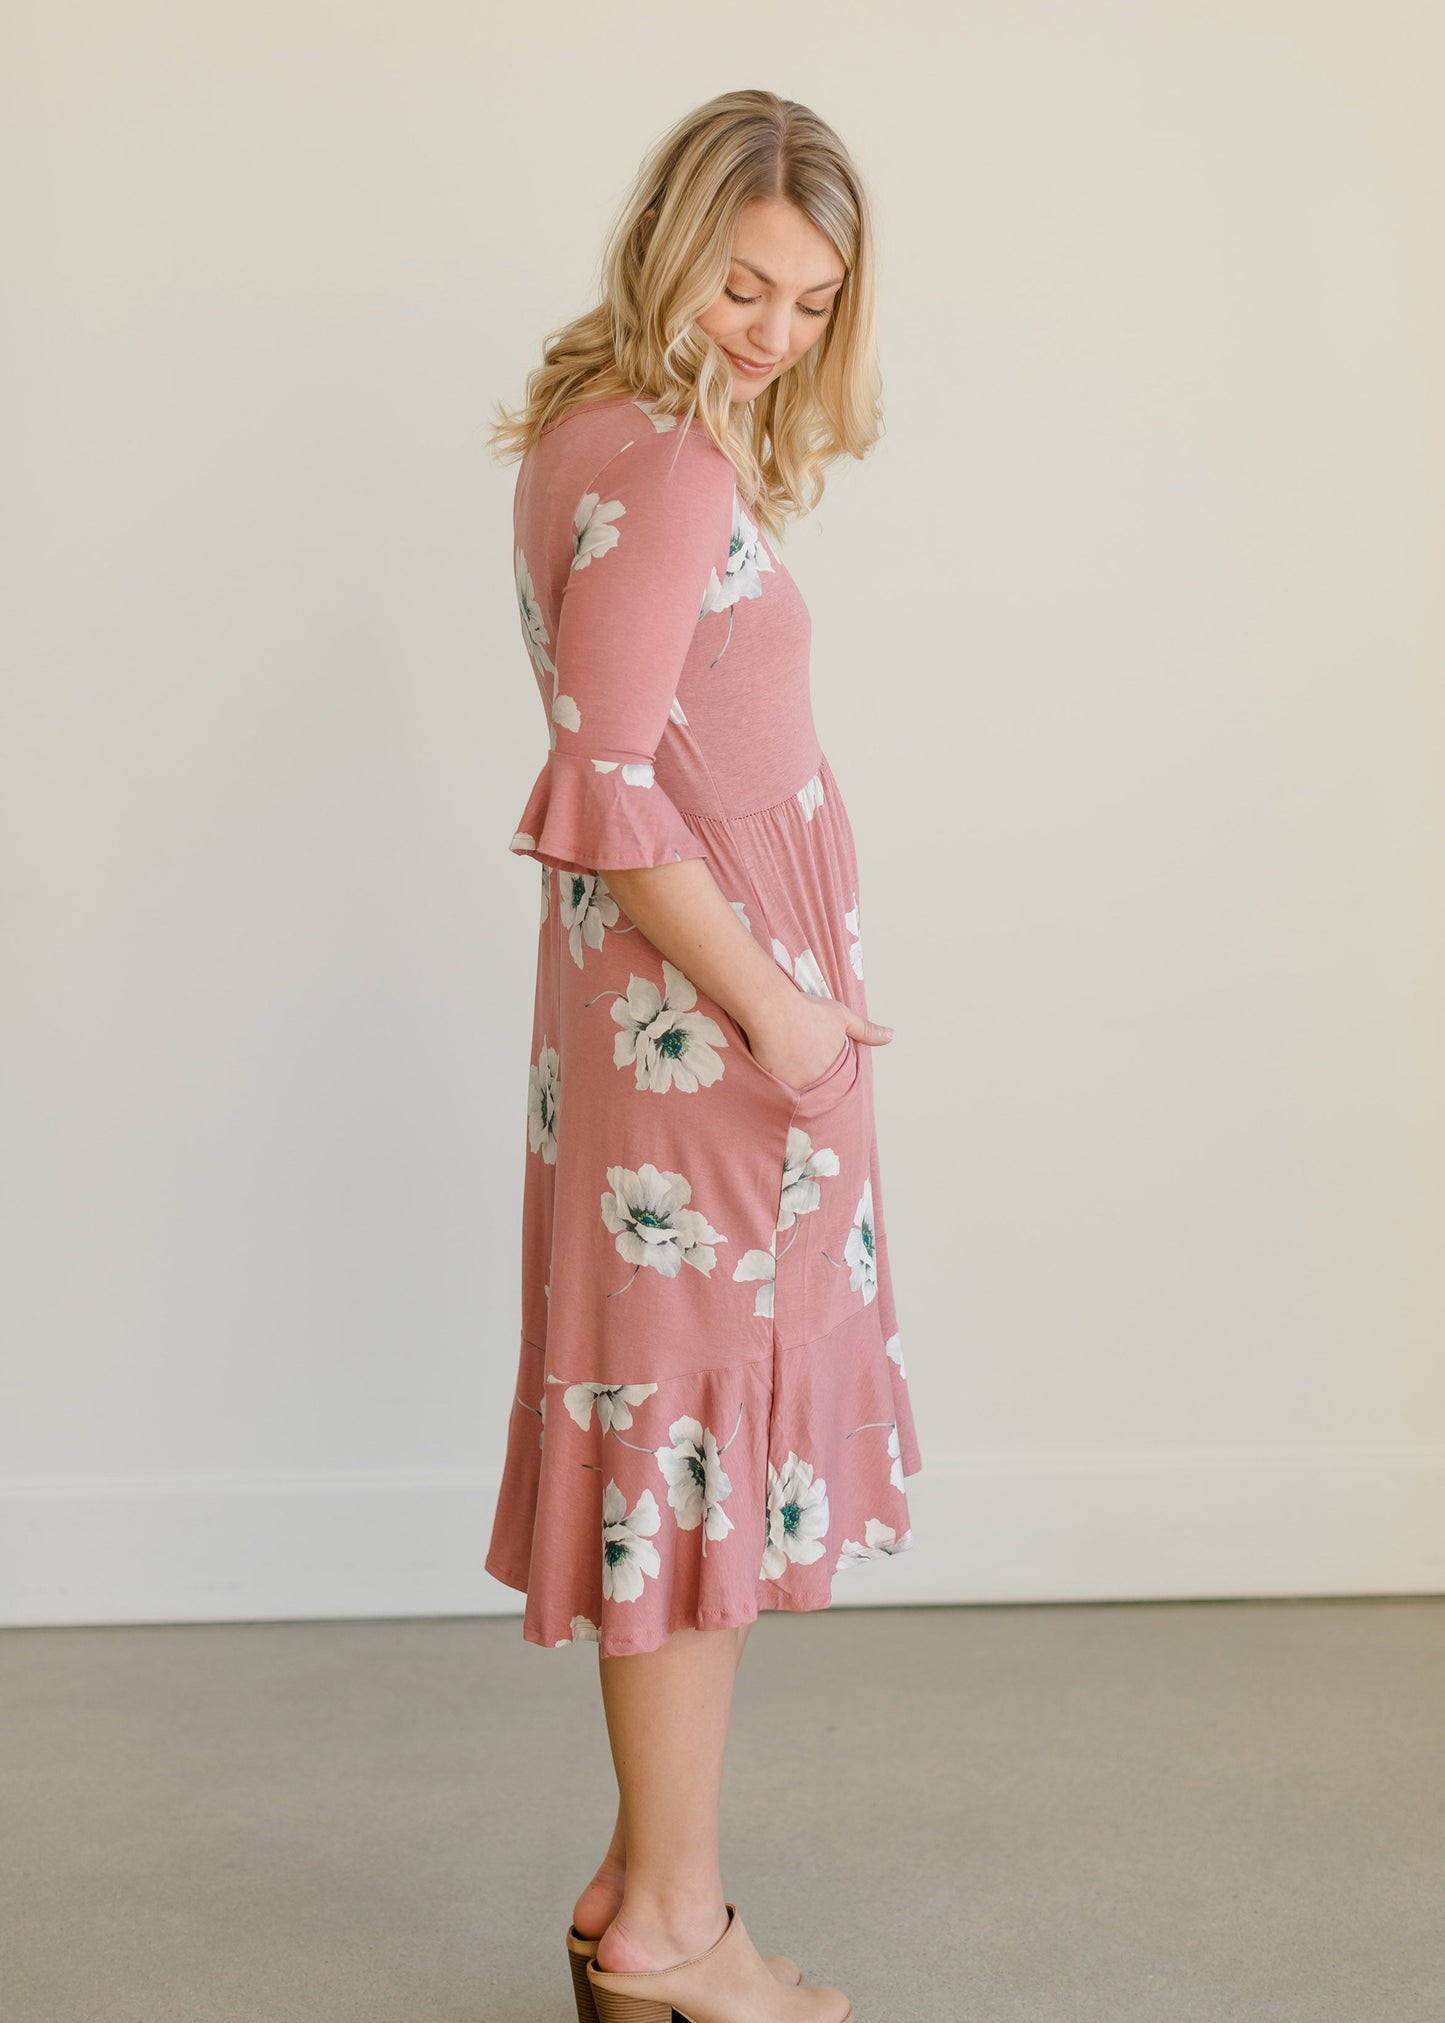 Blush Floral Buttersoft Midi Dress - FINAL SALE Dresses